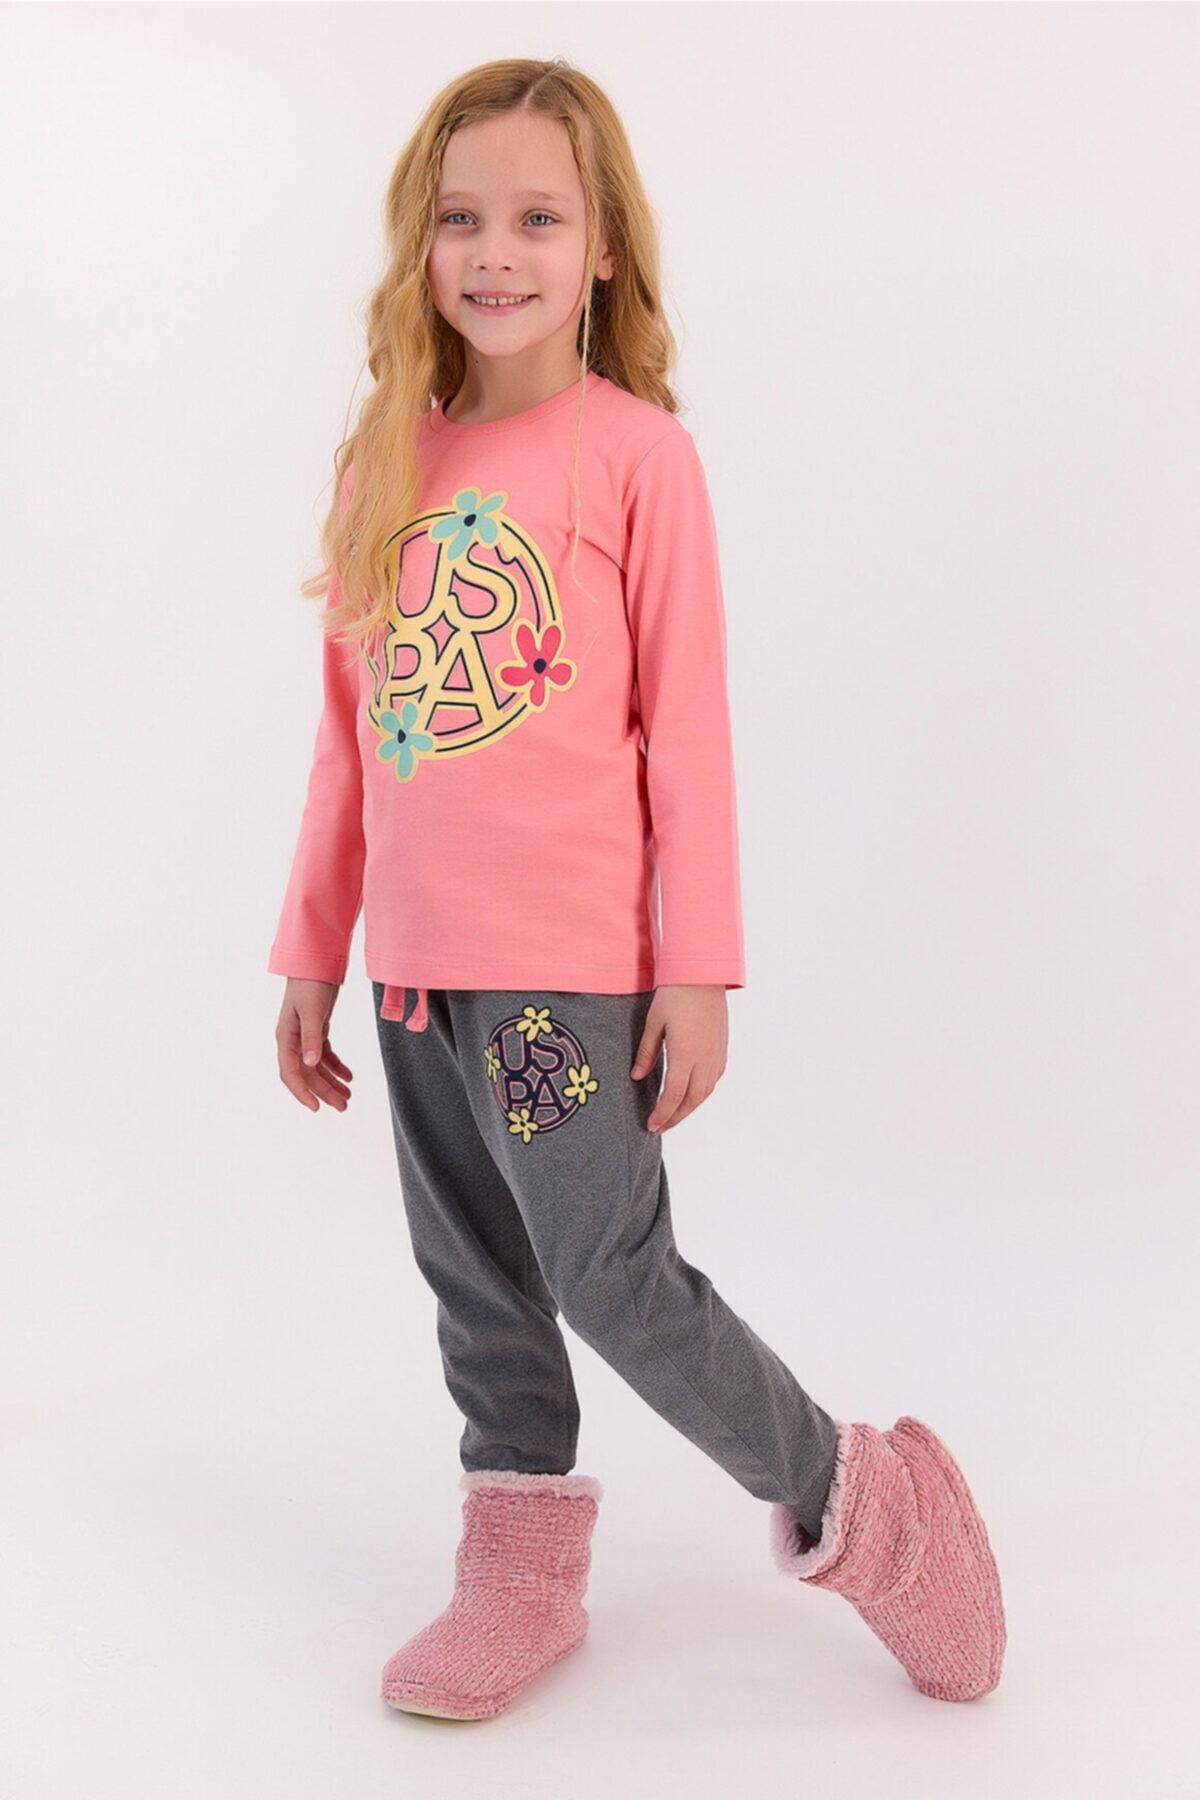 U.S. Polo Assn. Coral Kız Çocuk Pijama Takımı